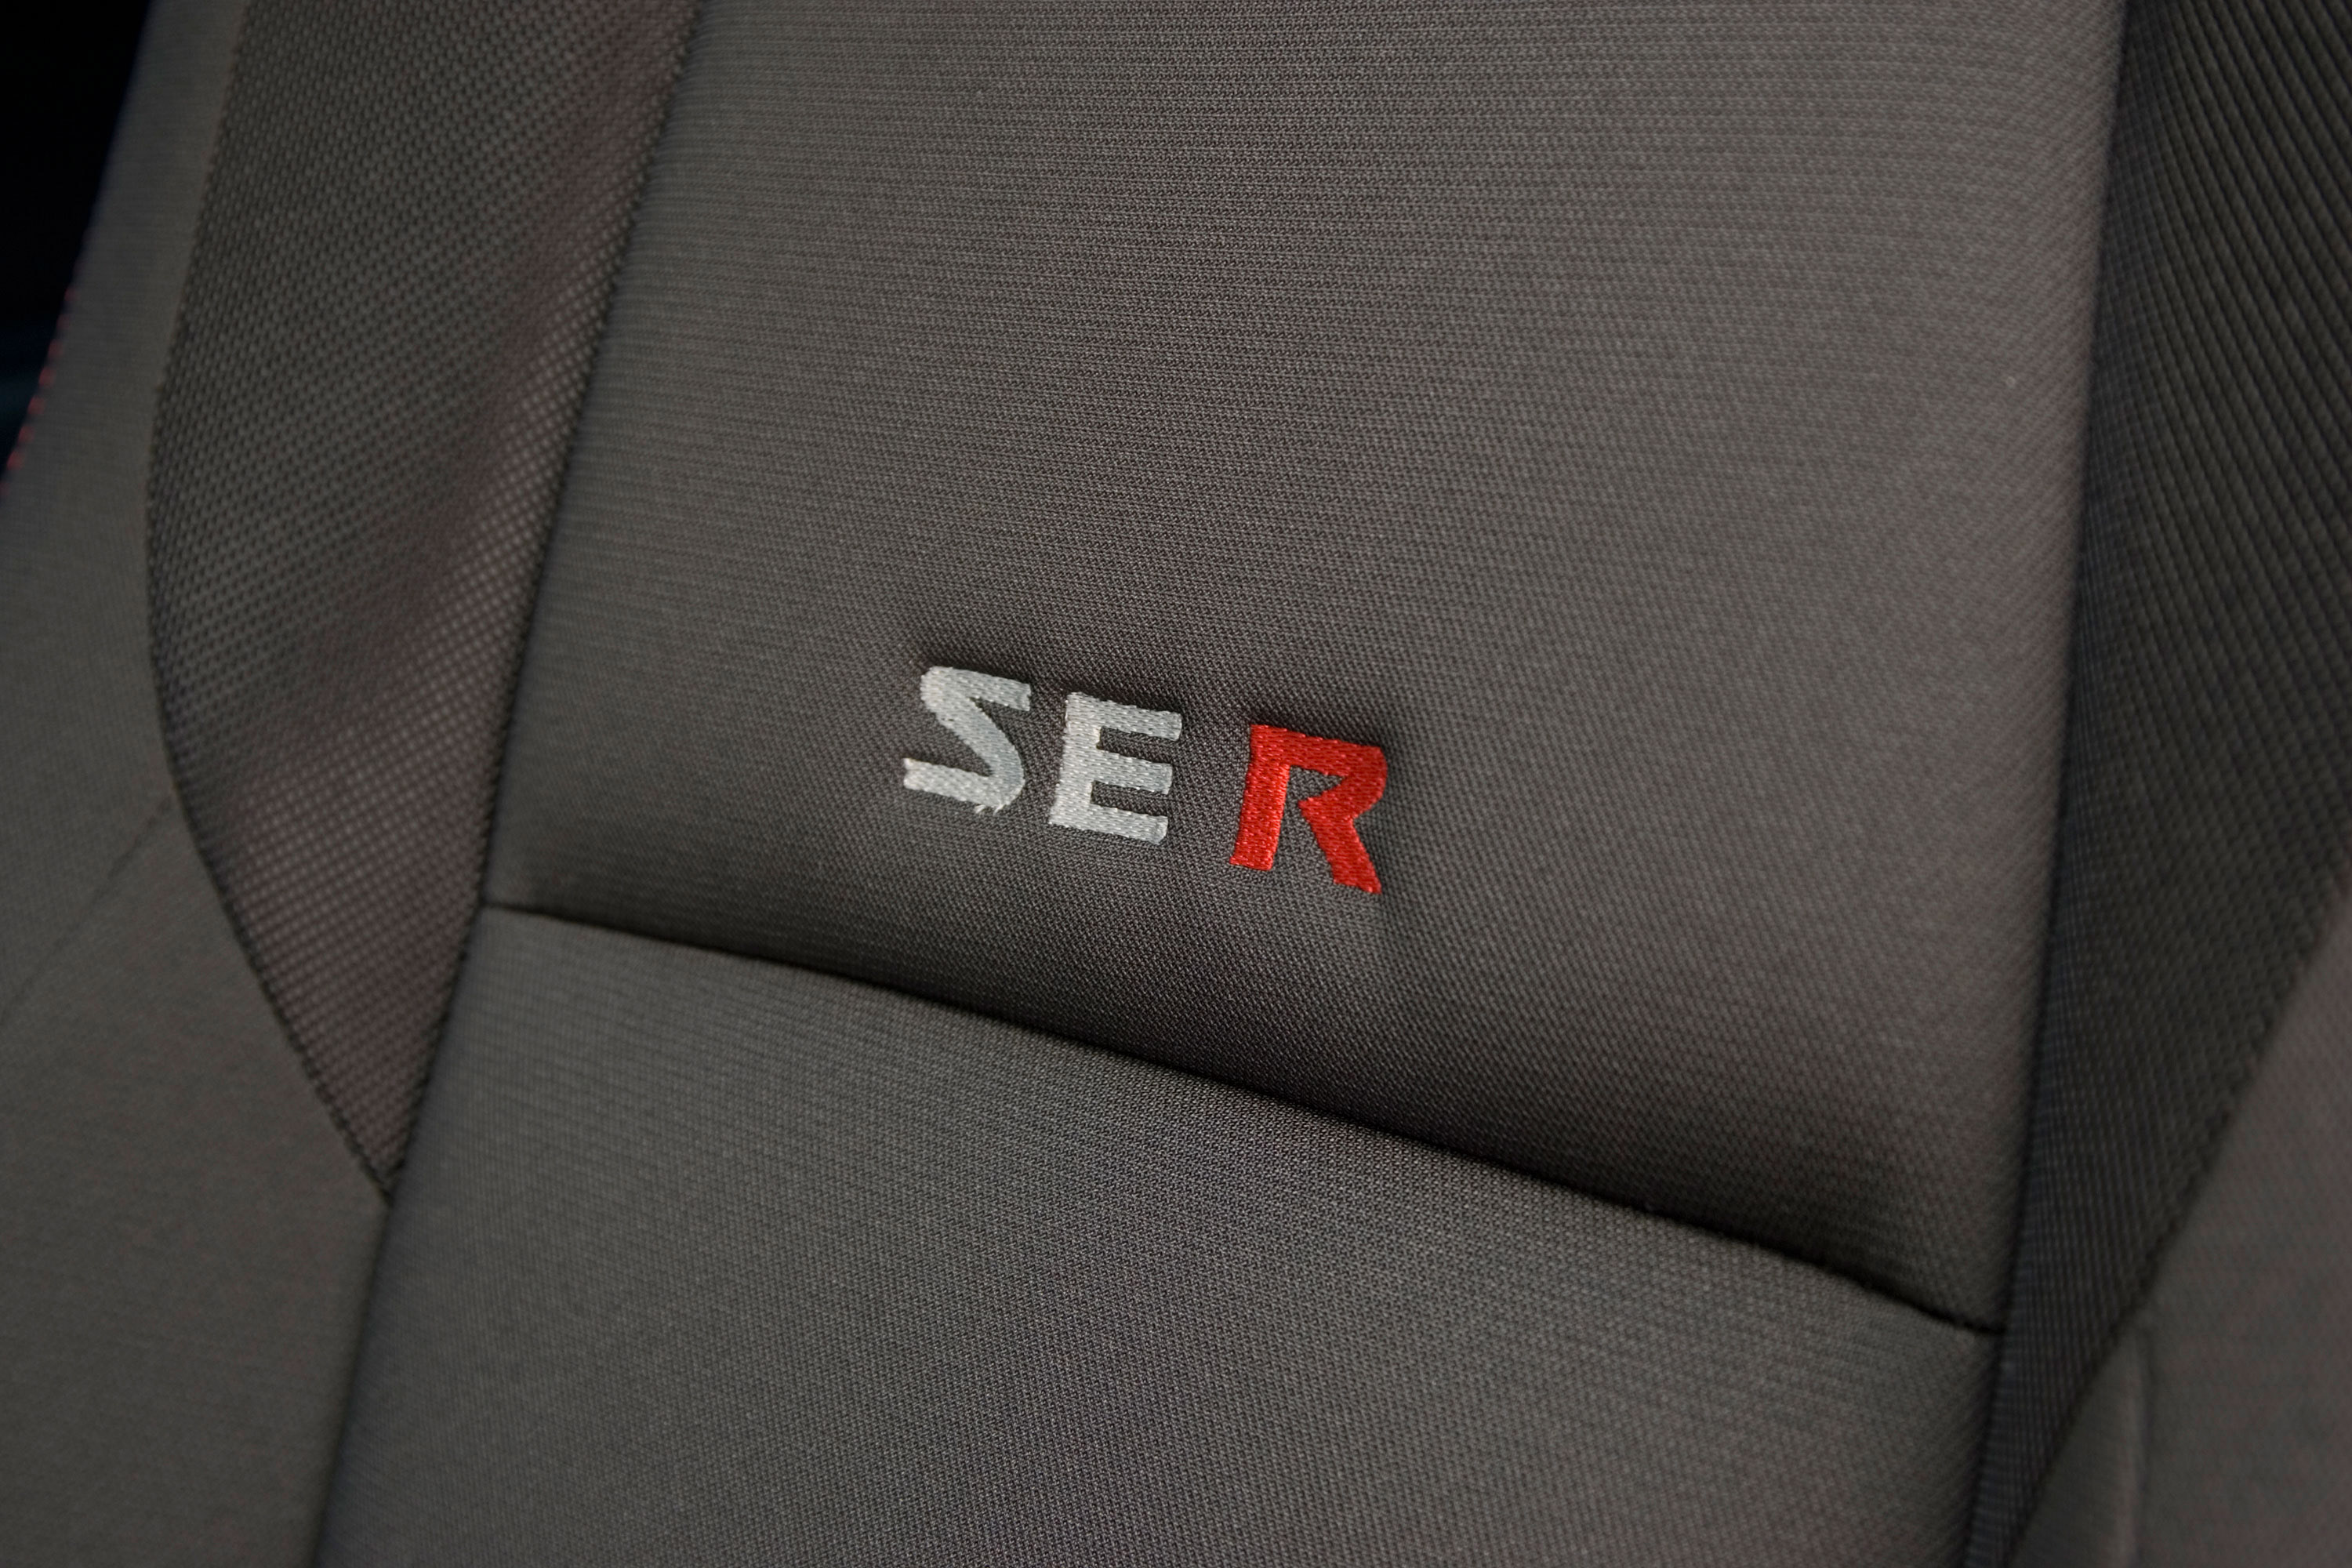 Nissan Sentra SE-R